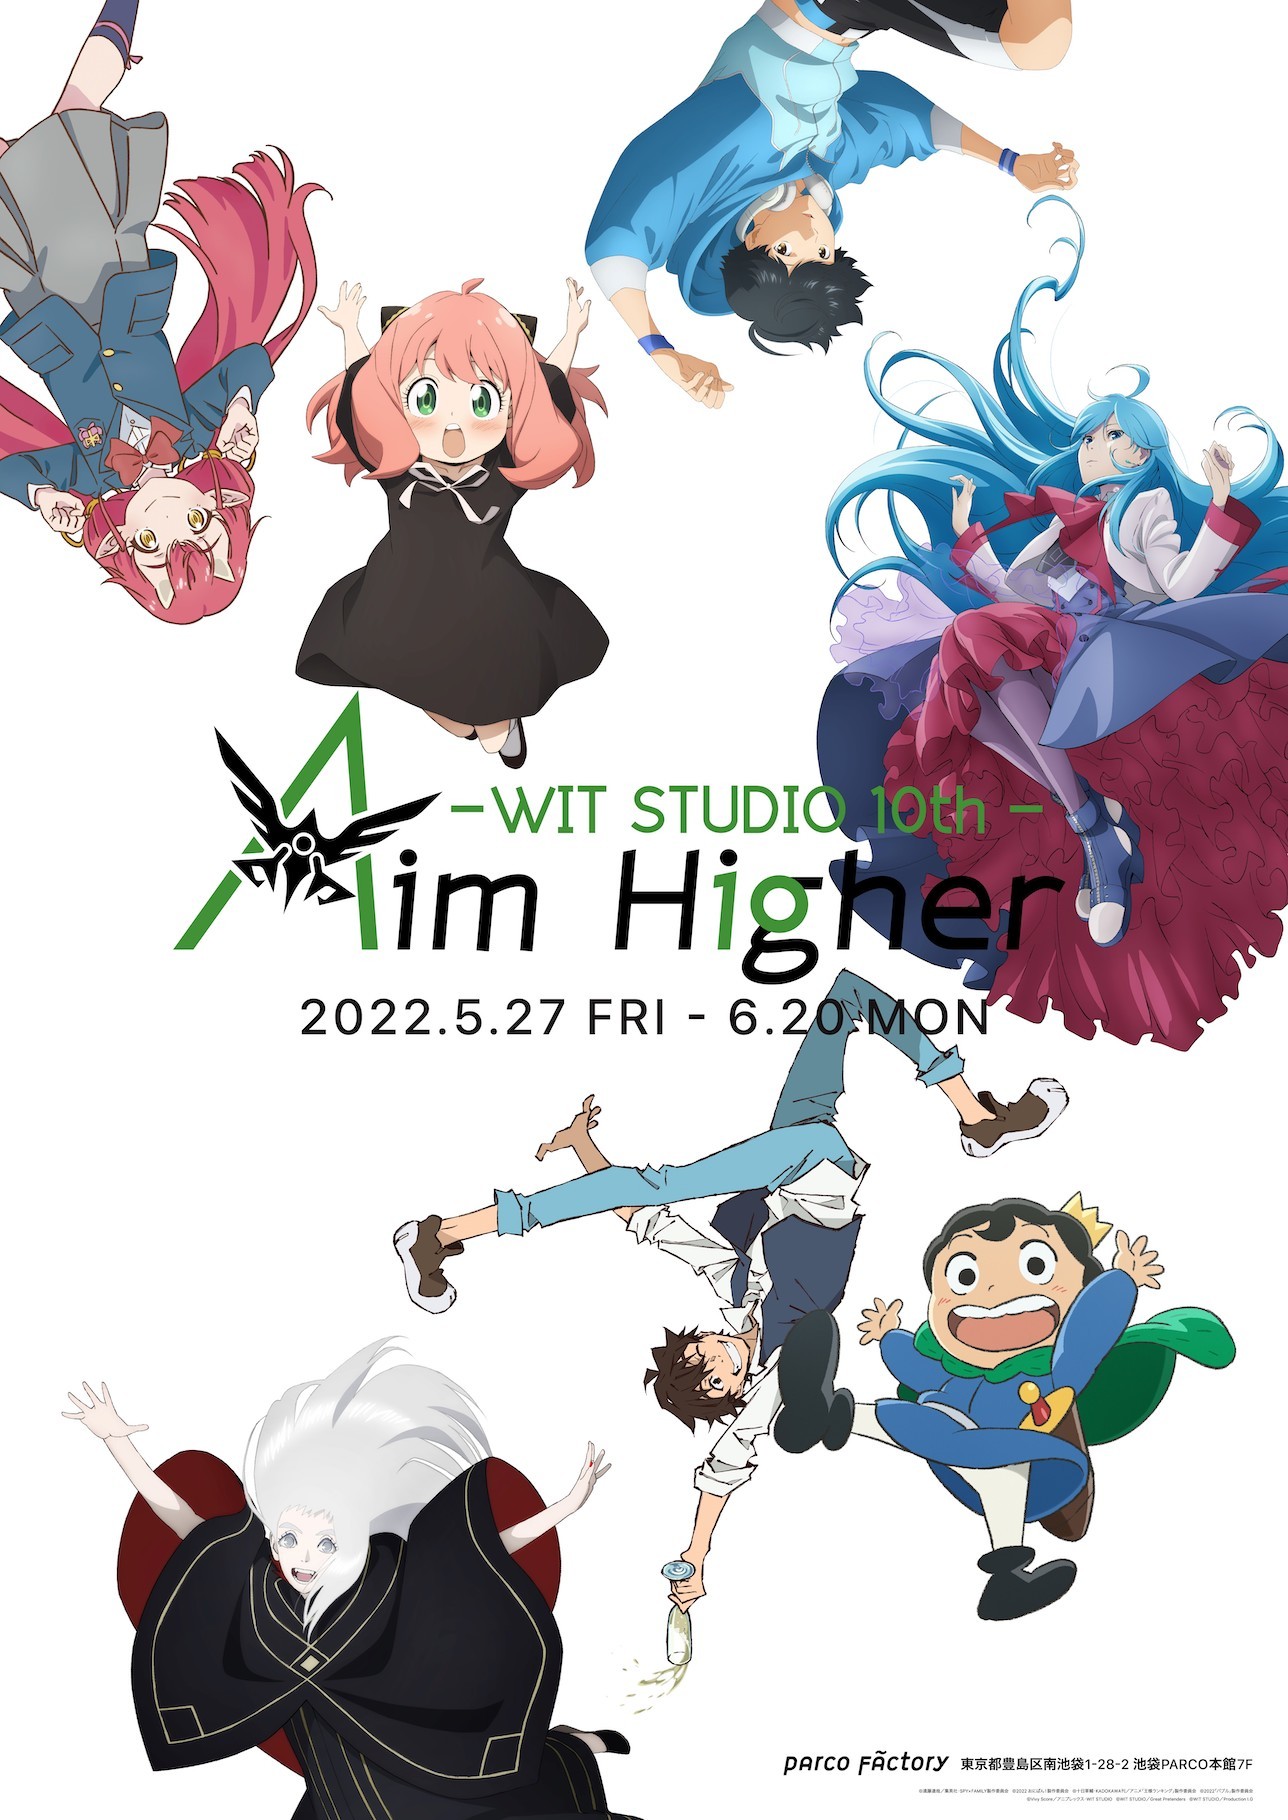 『WIT STUDIO 10th Aim Higher』